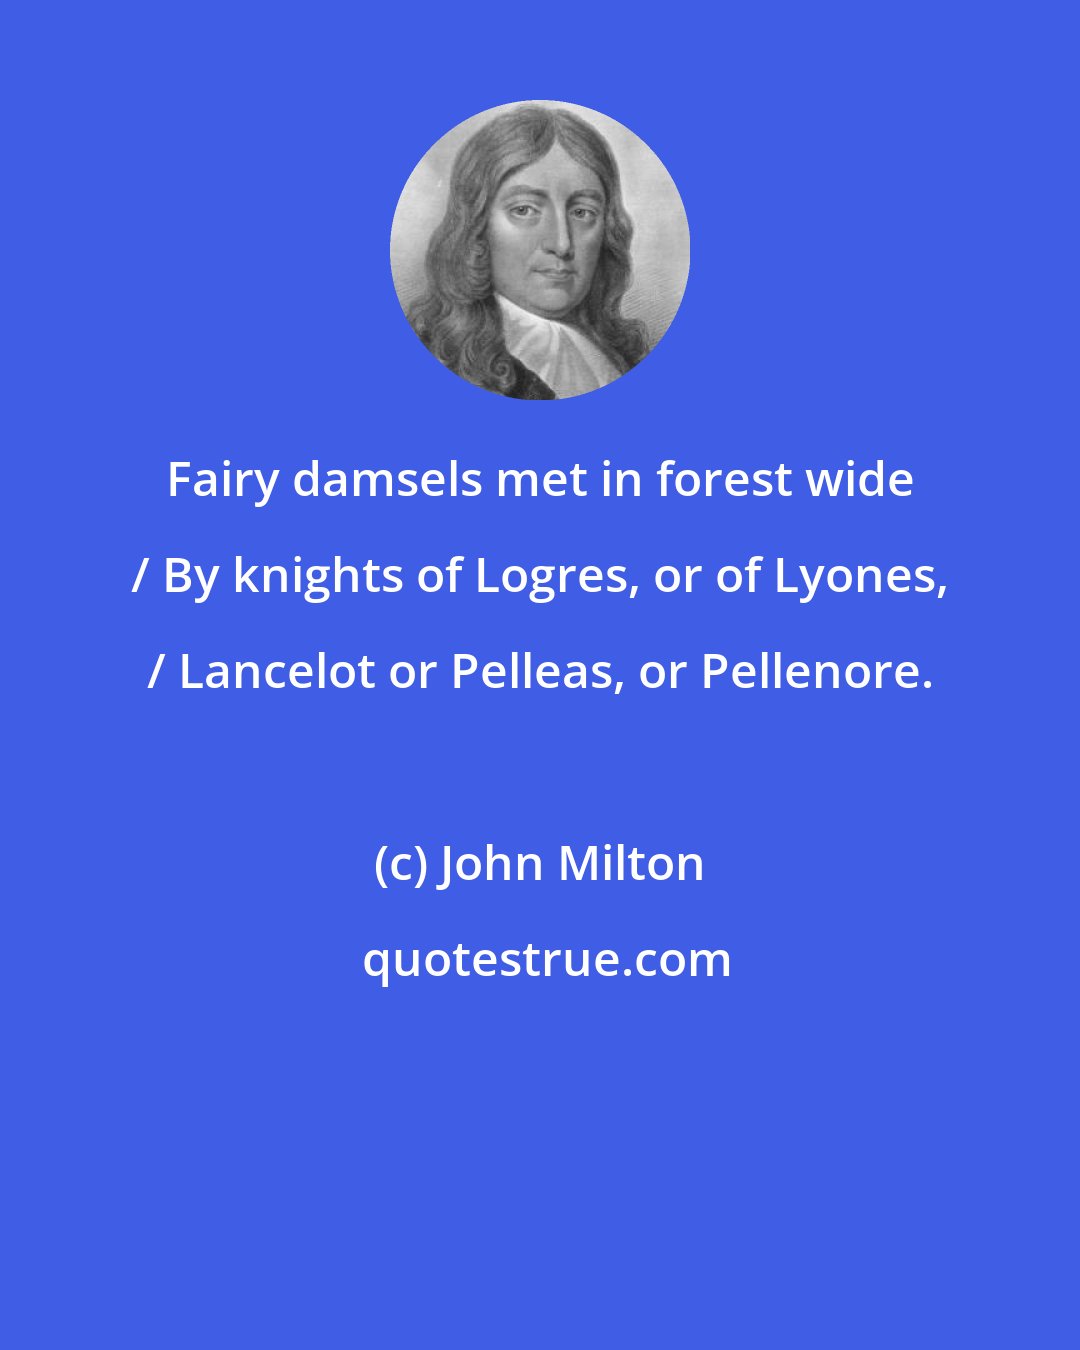 John Milton: Fairy damsels met in forest wide / By knights of Logres, or of Lyones, / Lancelot or Pelleas, or Pellenore.